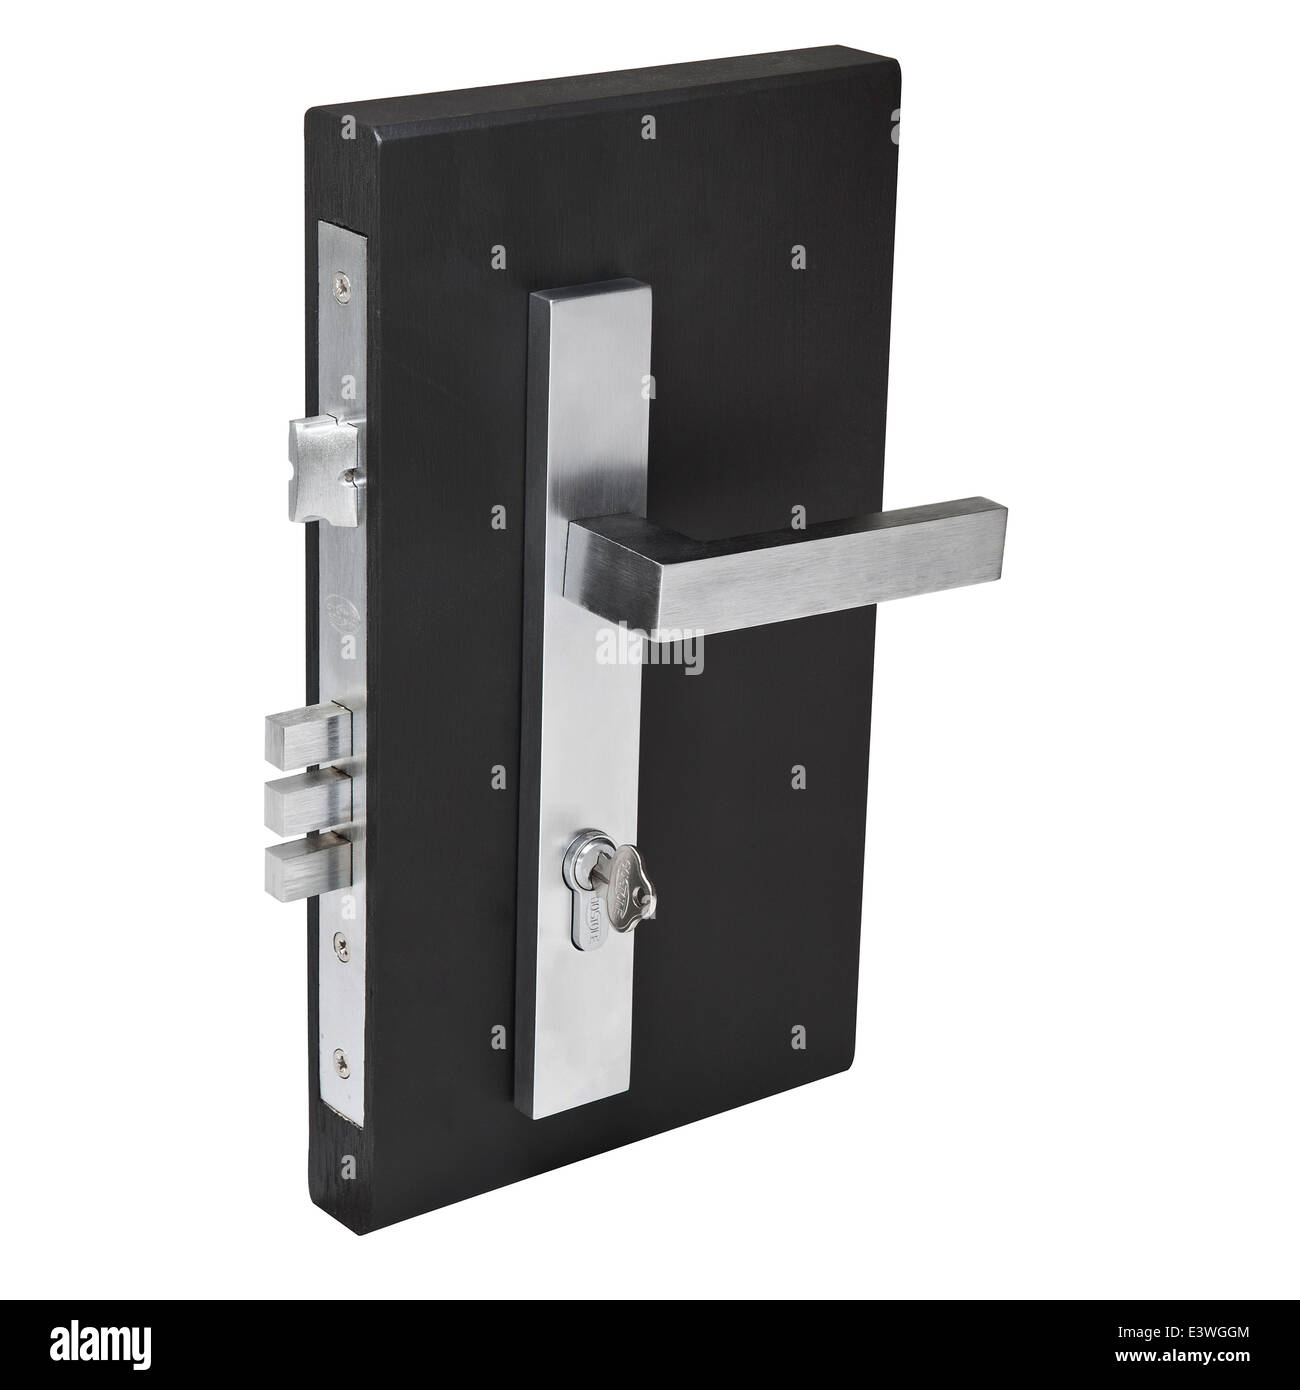 door lock fixture brushed steel fittings mechanism and keys. Stock Photo